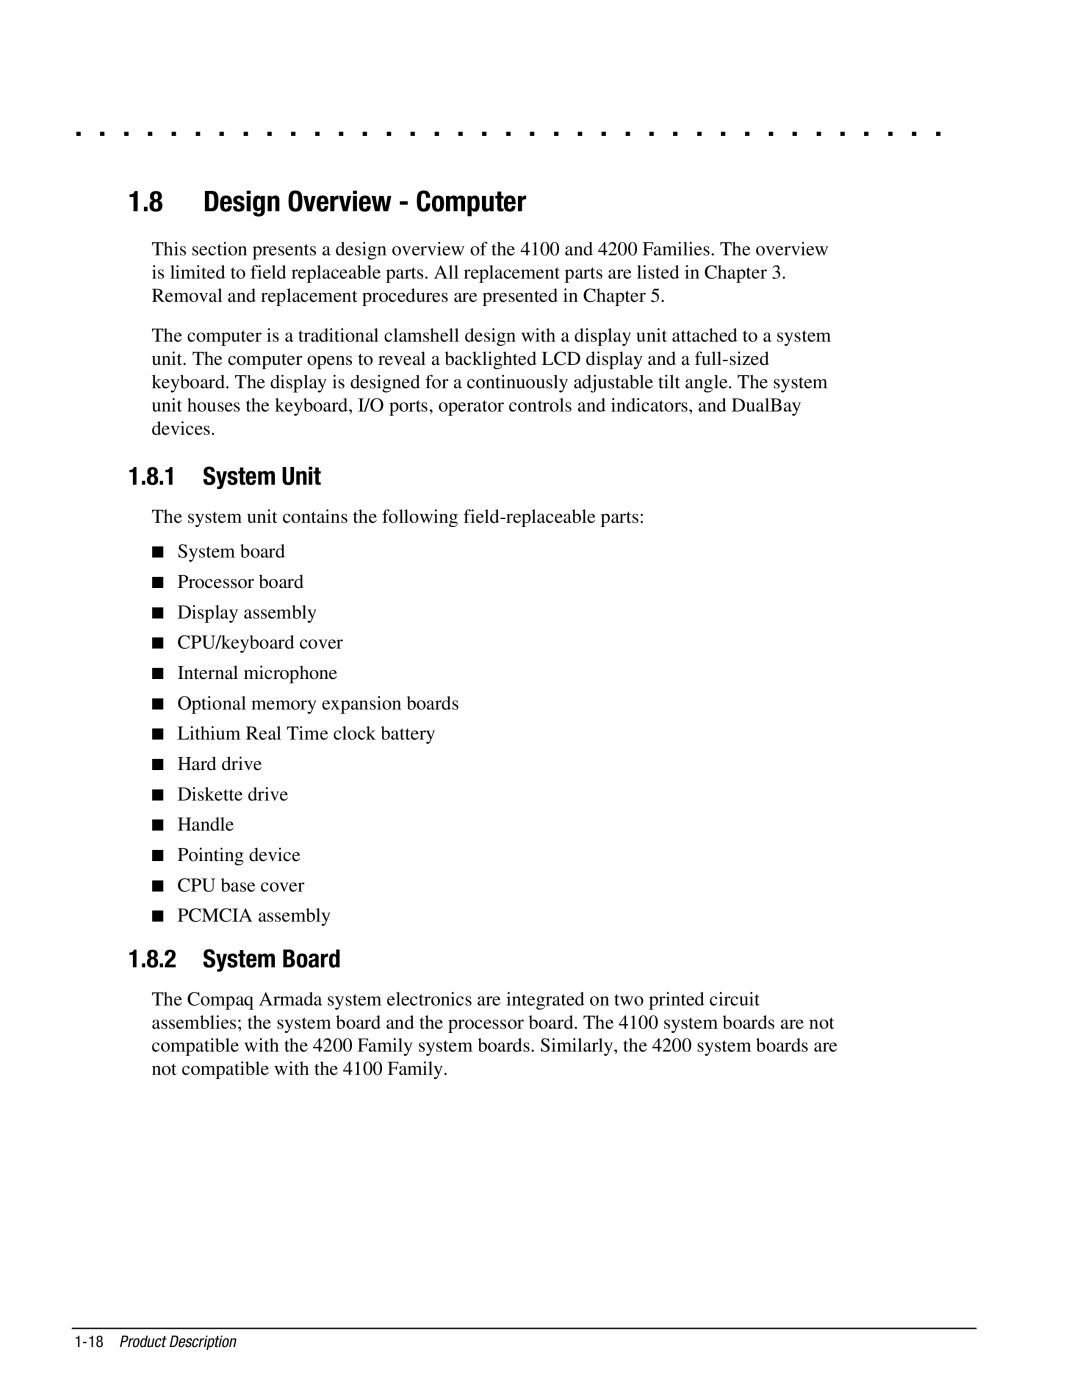 Compaq 4120T, 4130T, 4150T, 4140T, 4131T, 4200, 4125T, 4160T, 4125D, 4115 Design Overview - Computer, System Unit, System Board 